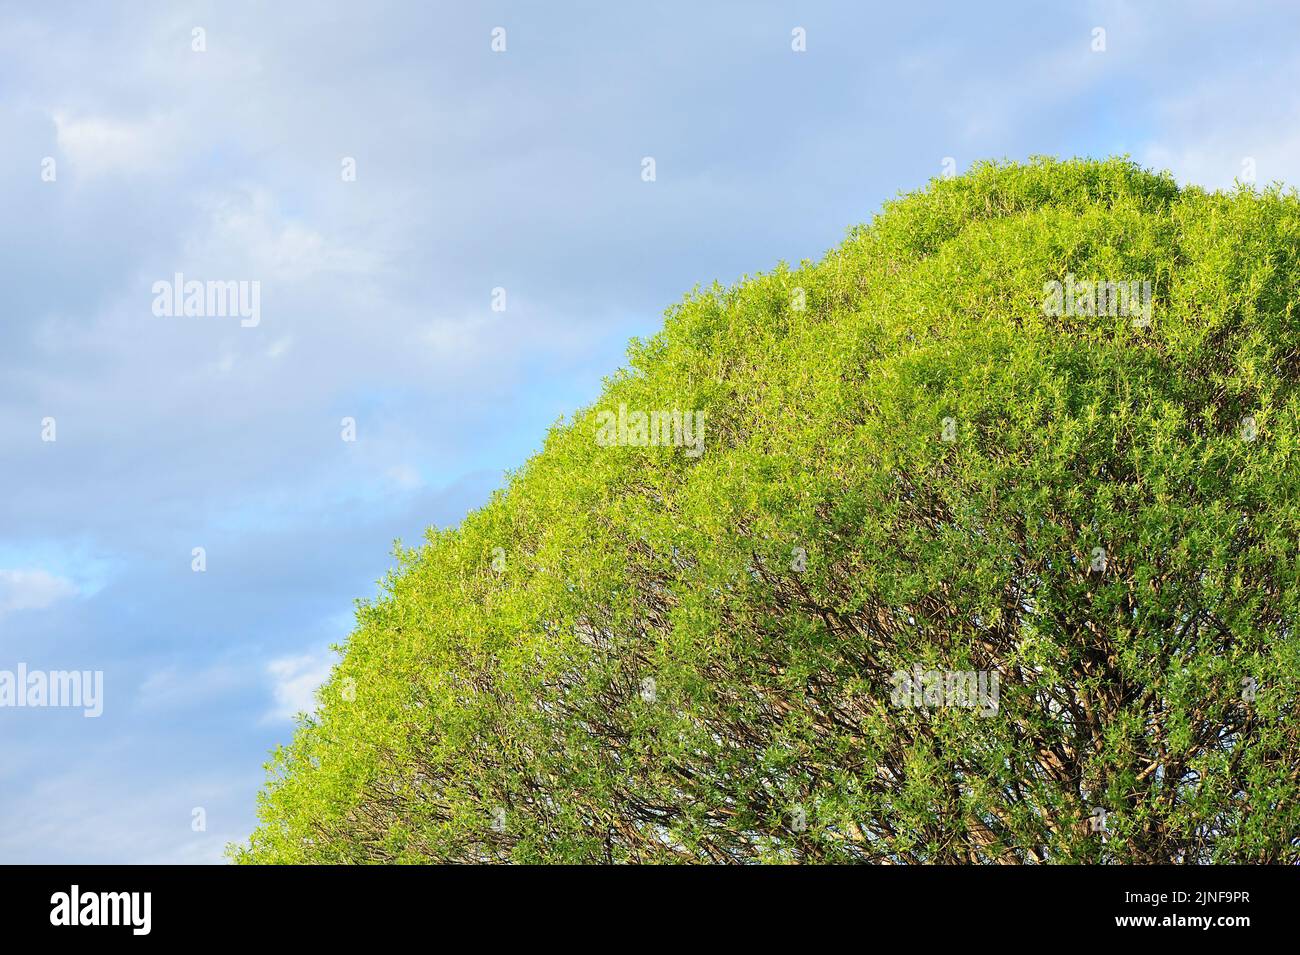 Crack willow (Salix fragilis) treetop with lush foliage against summer sky. Stock Photo